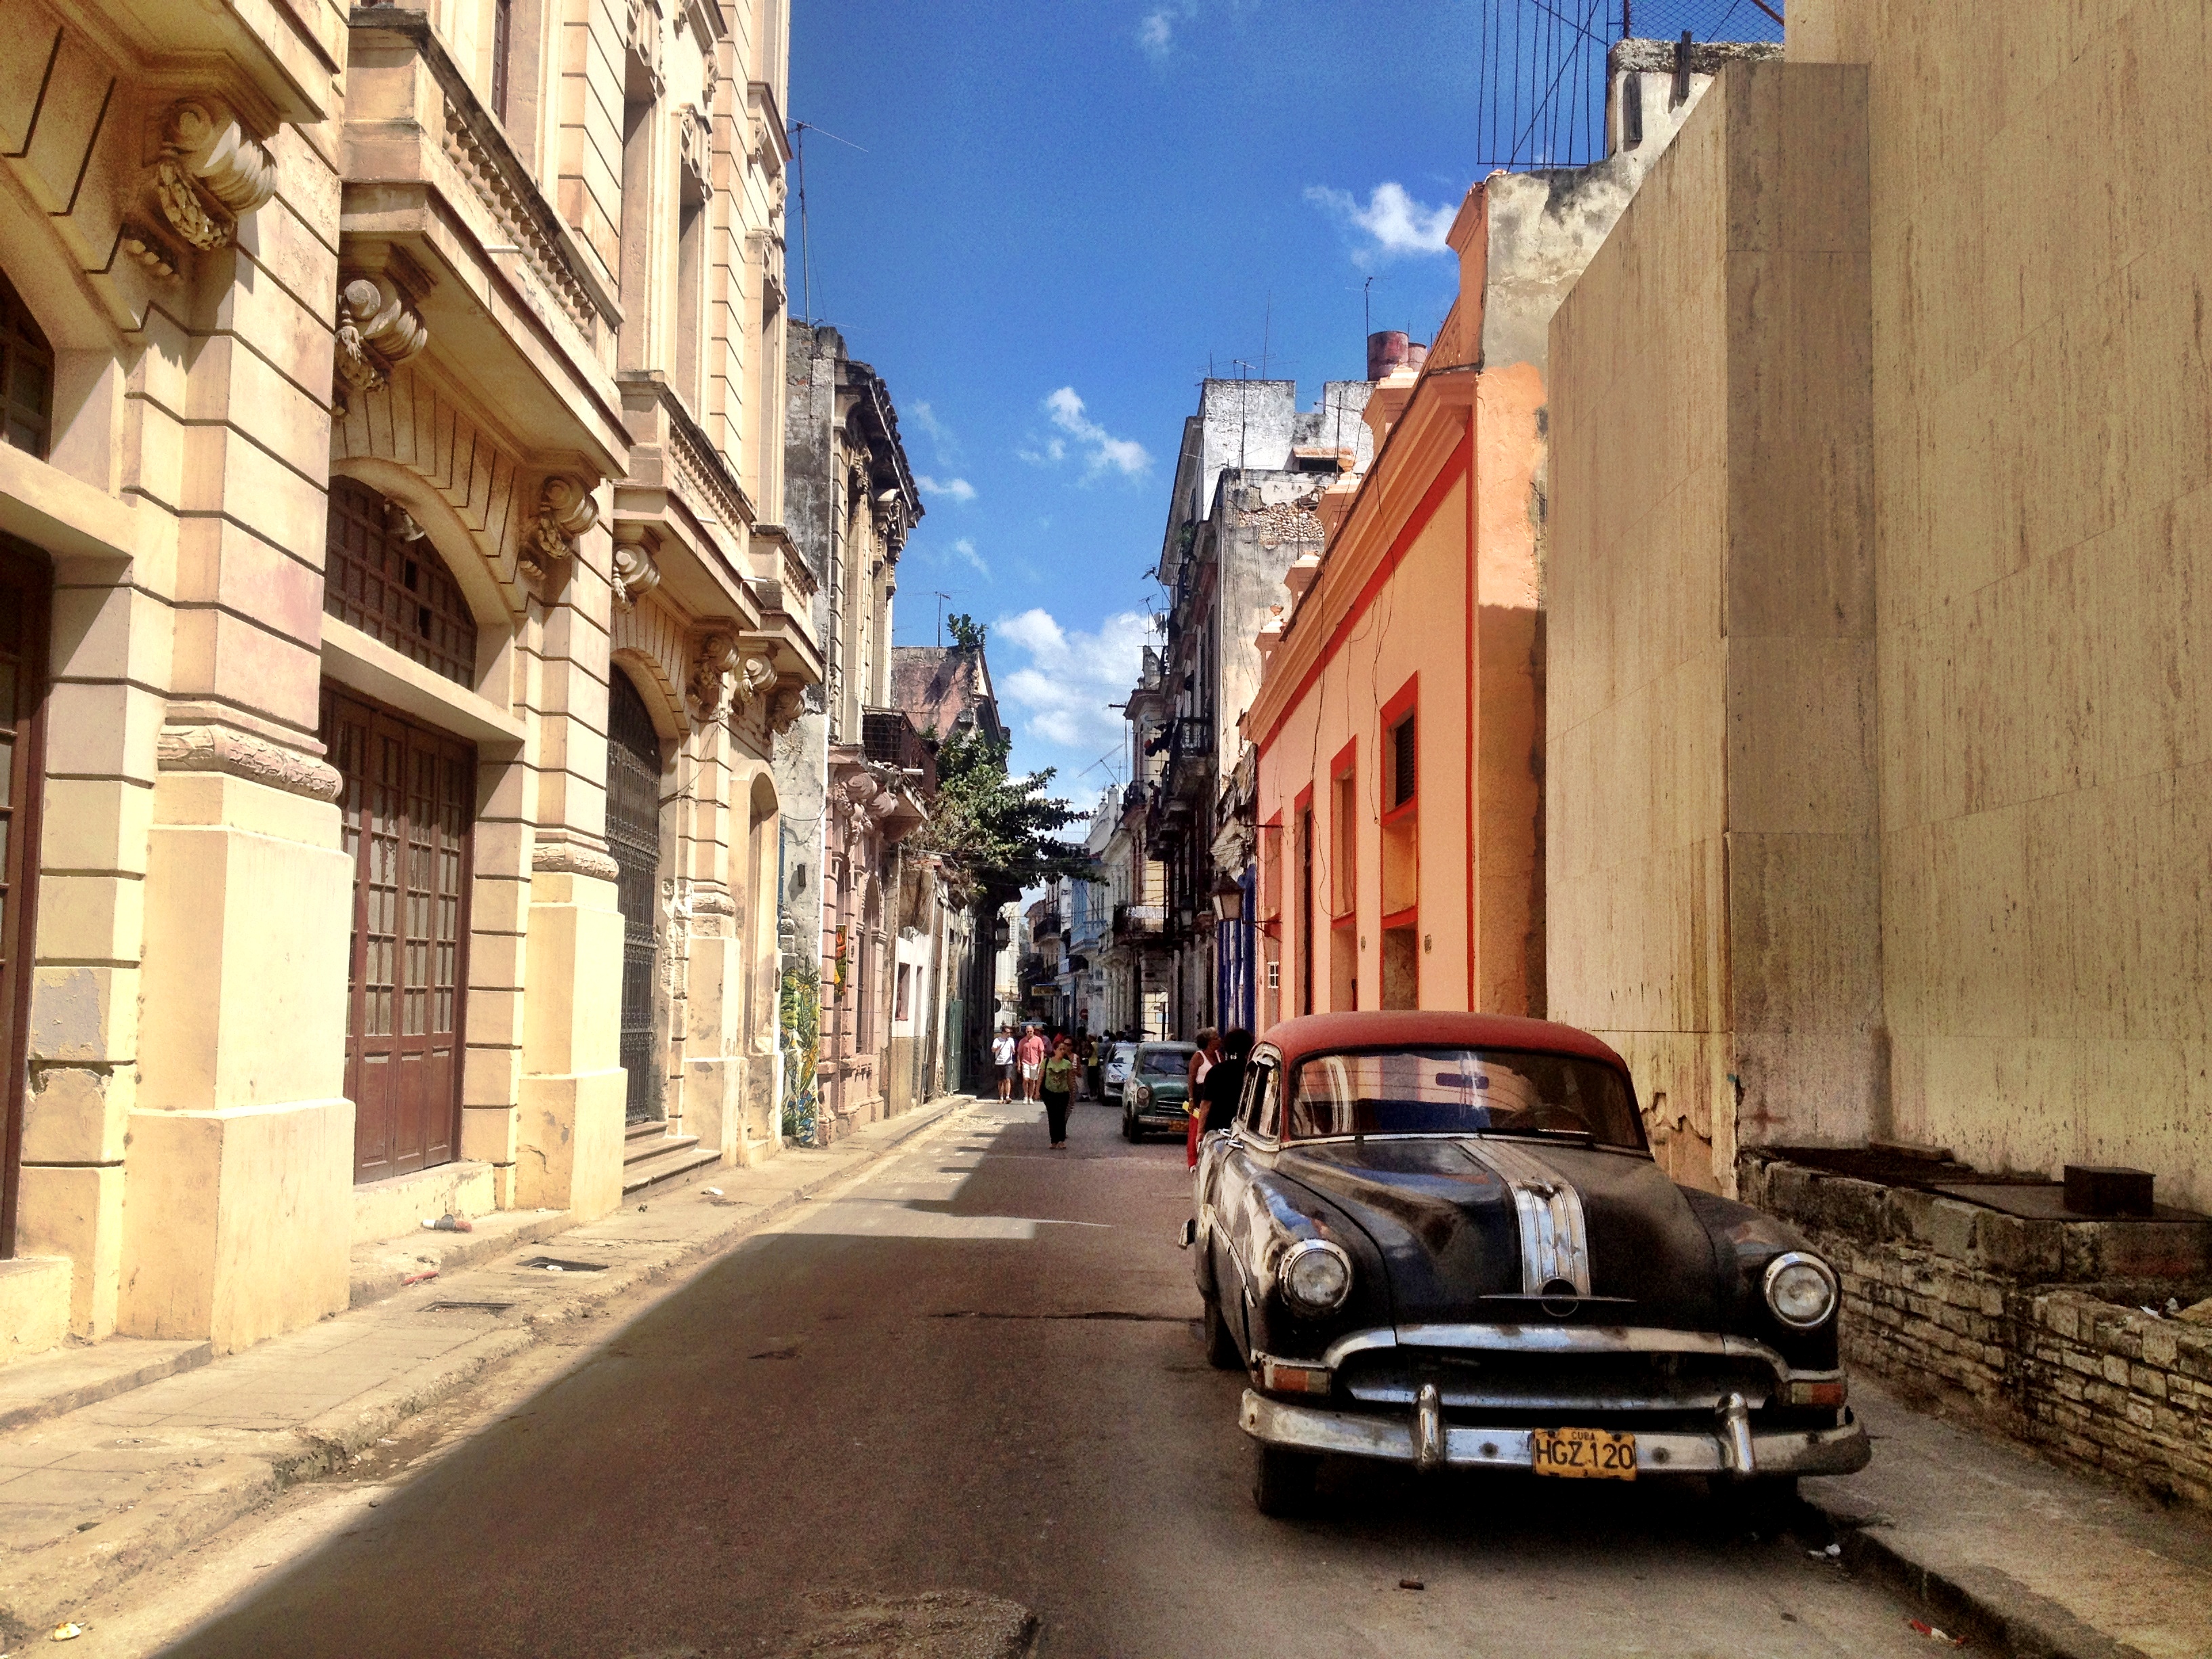 In Photos: Highlights of Old Havana, Cuba